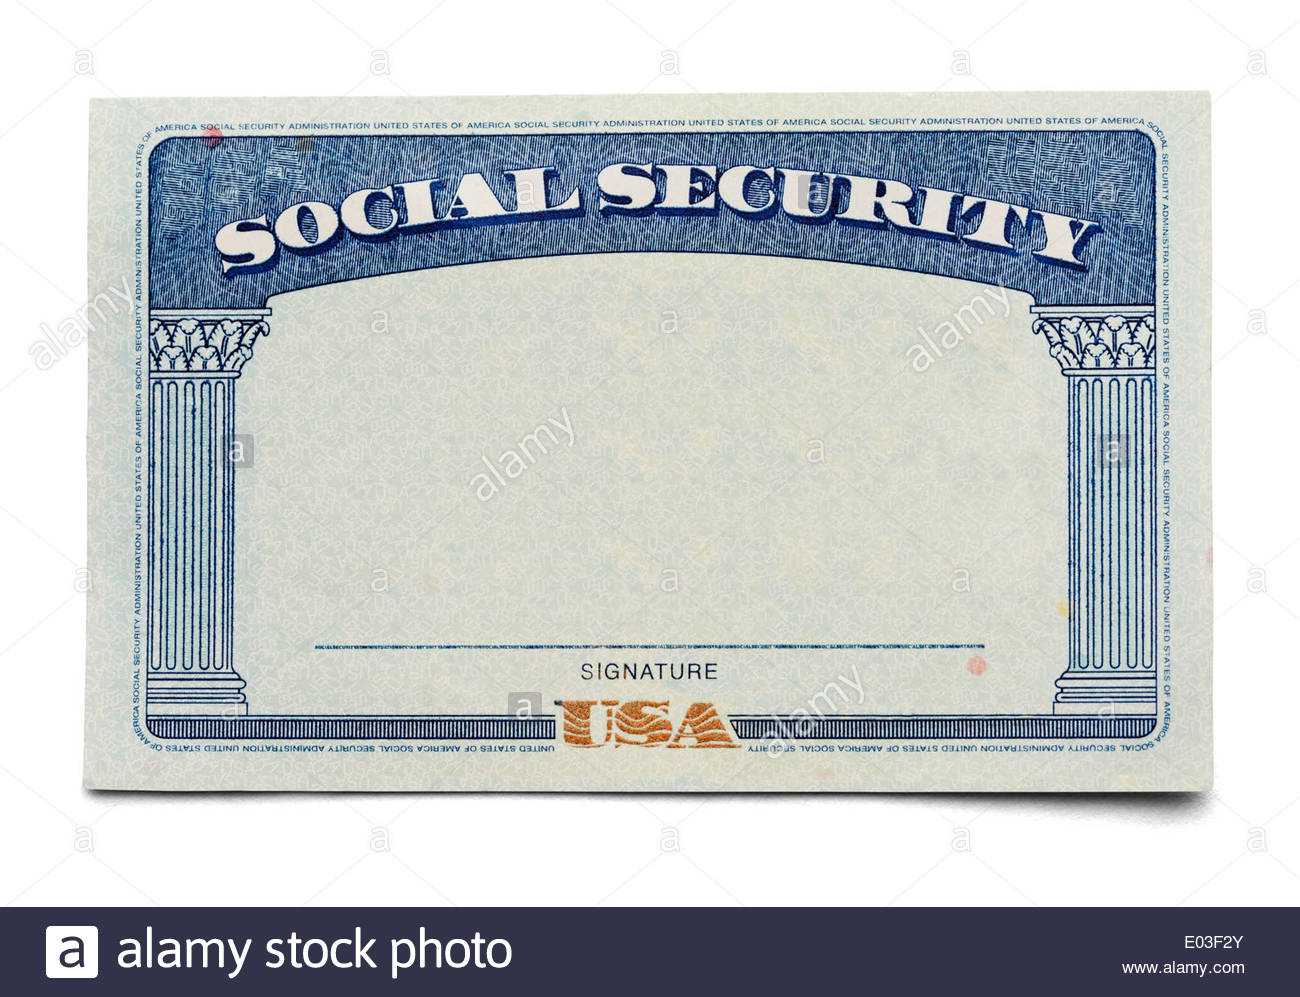 Social Security Stock Photos & Social Security Stock Images With Regard To Fake Social Security Card Template Download